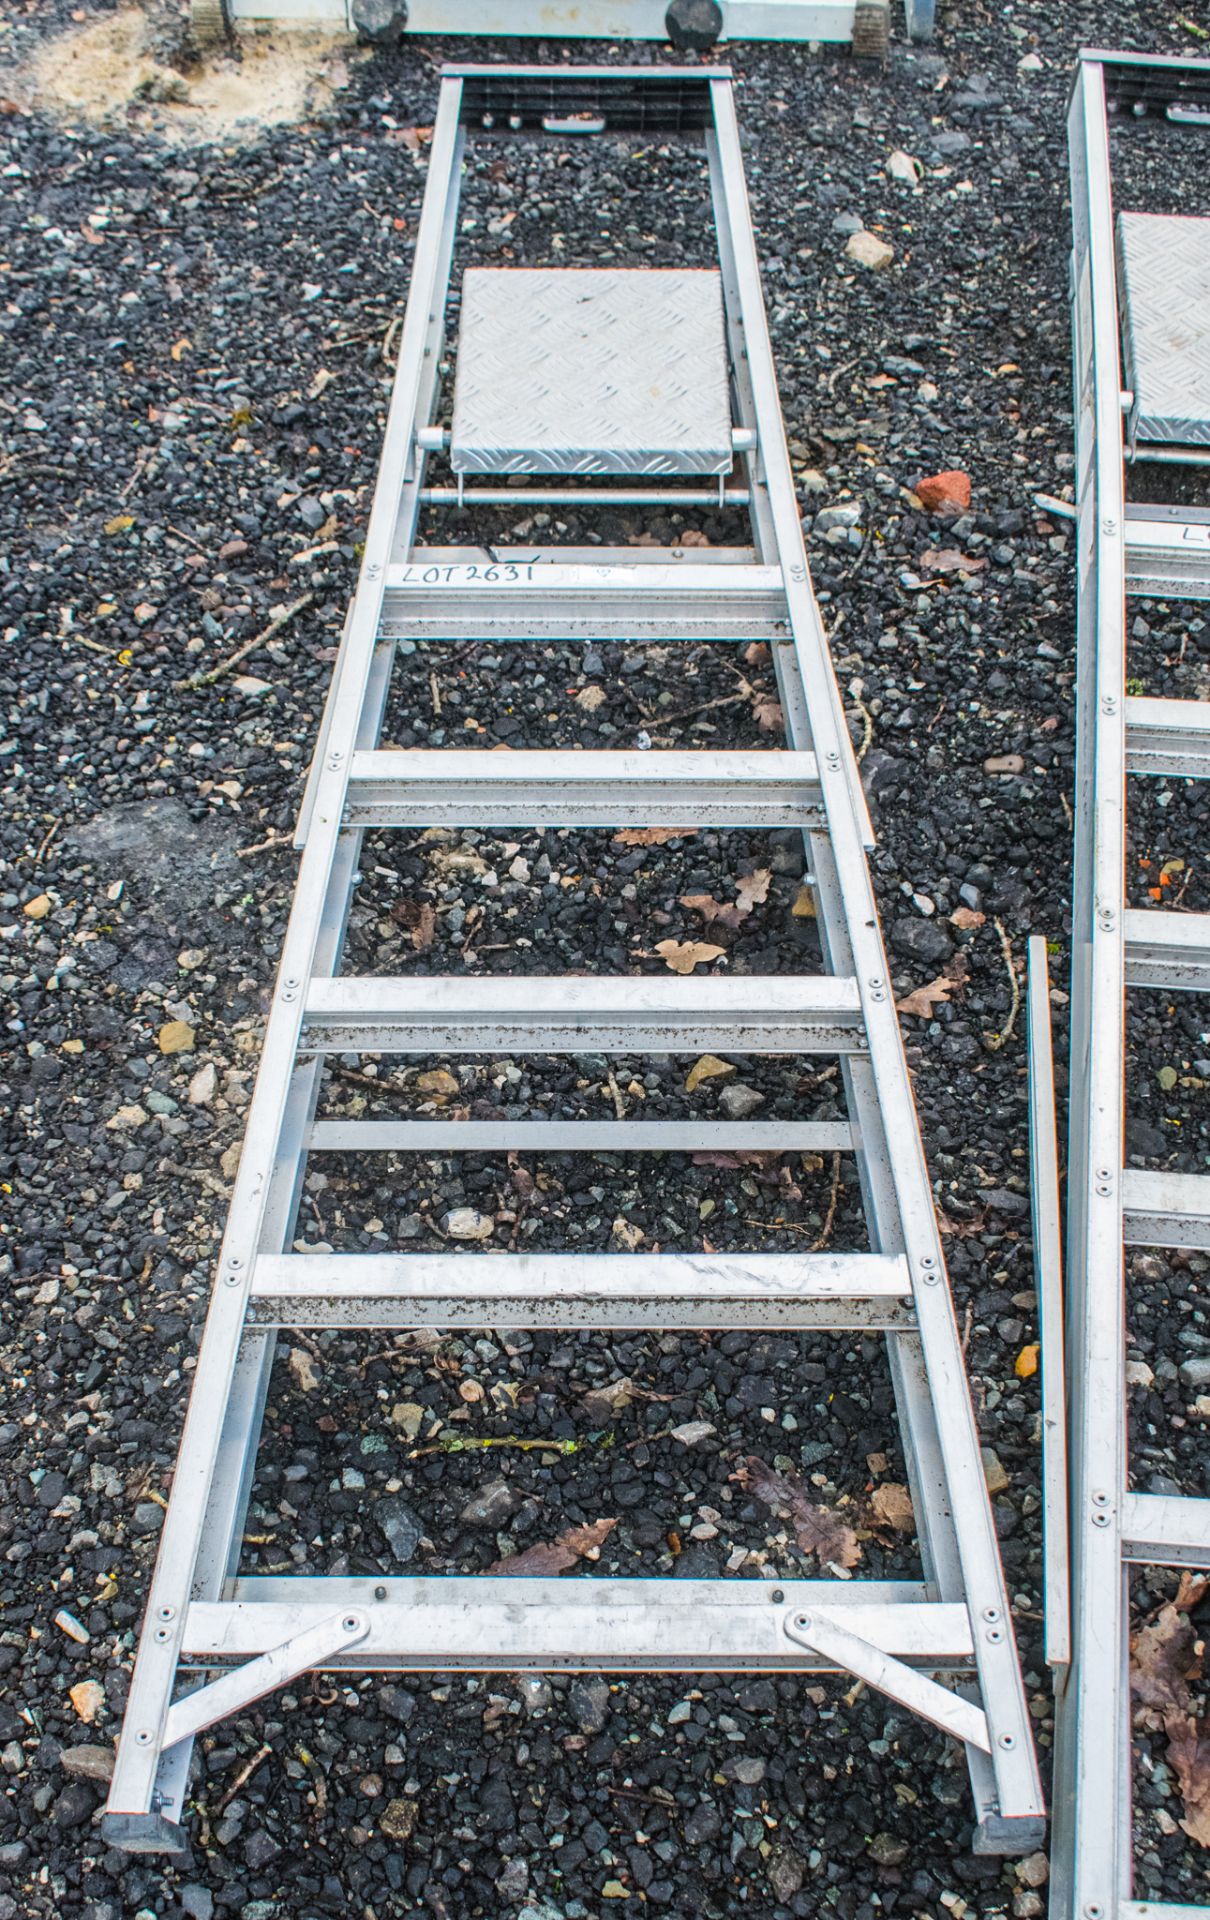 6 tread aluminium step ladder